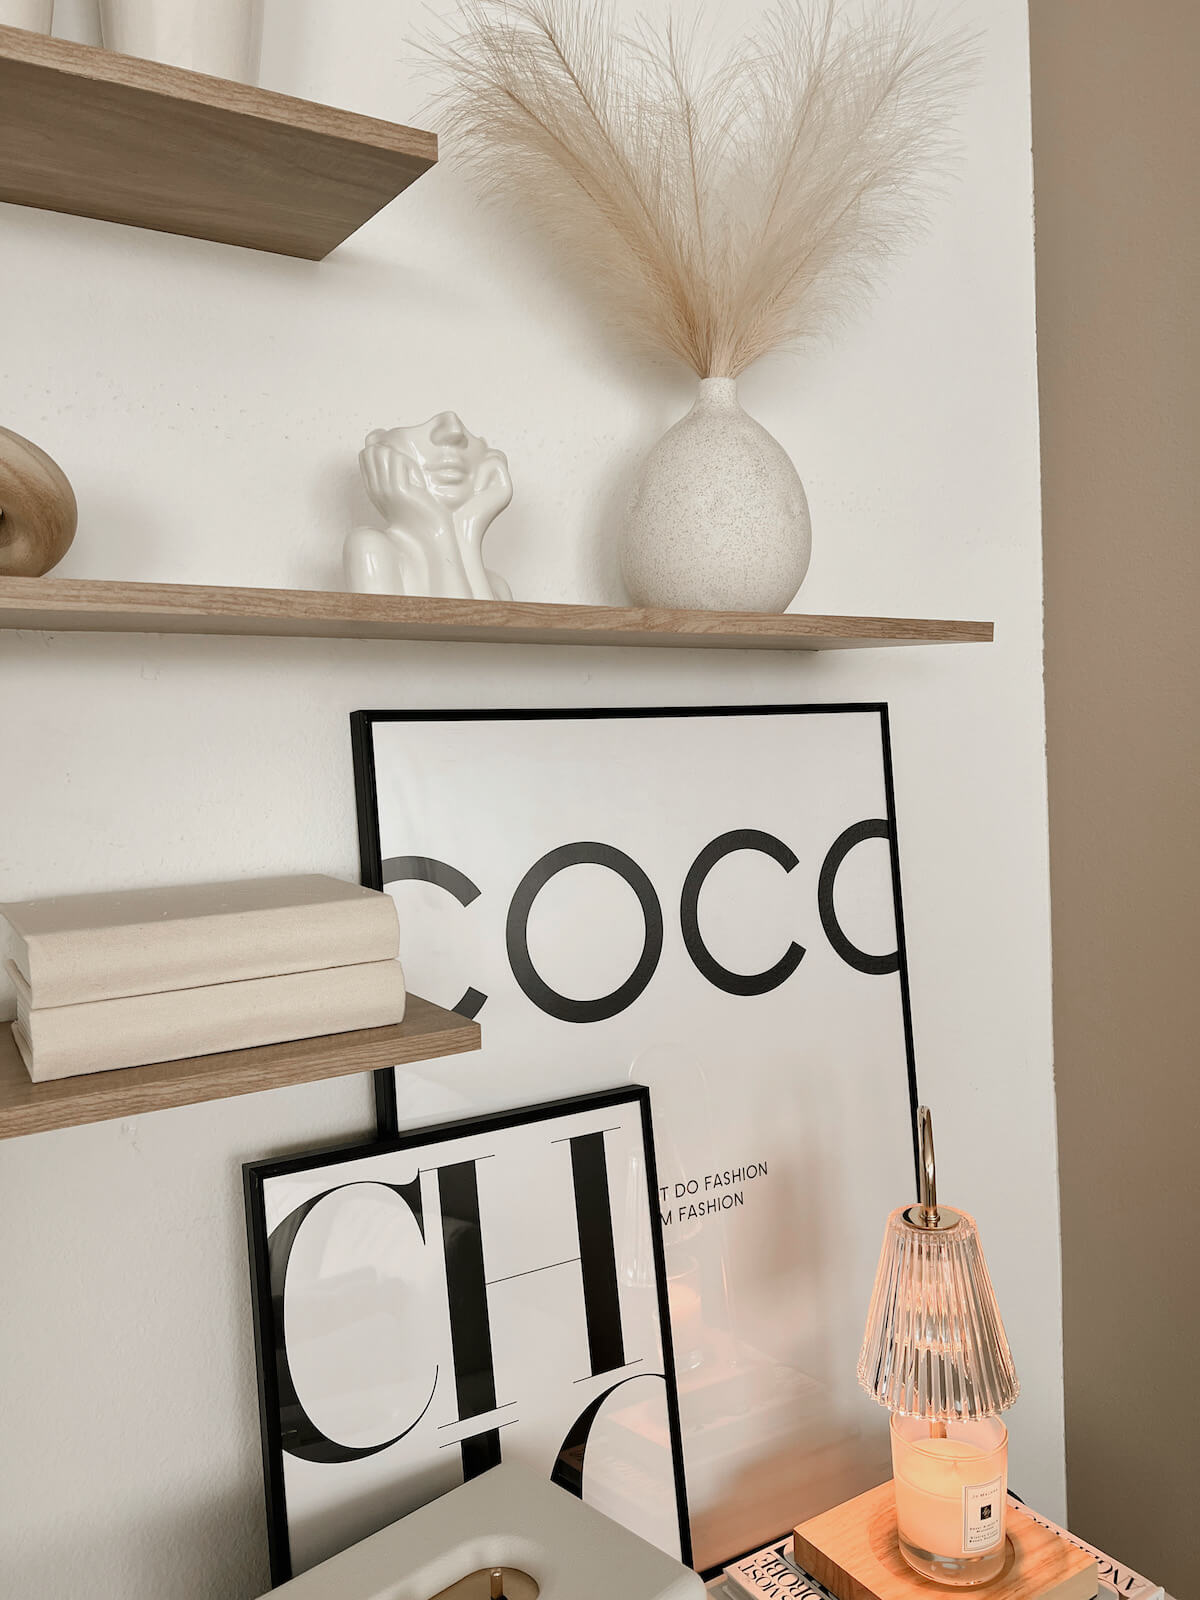 Sideboard Decor Inspo | Nathan James Sideboard | Floating Shelves | Shelf Styling | Shelf Decor | Neutral Home Decor